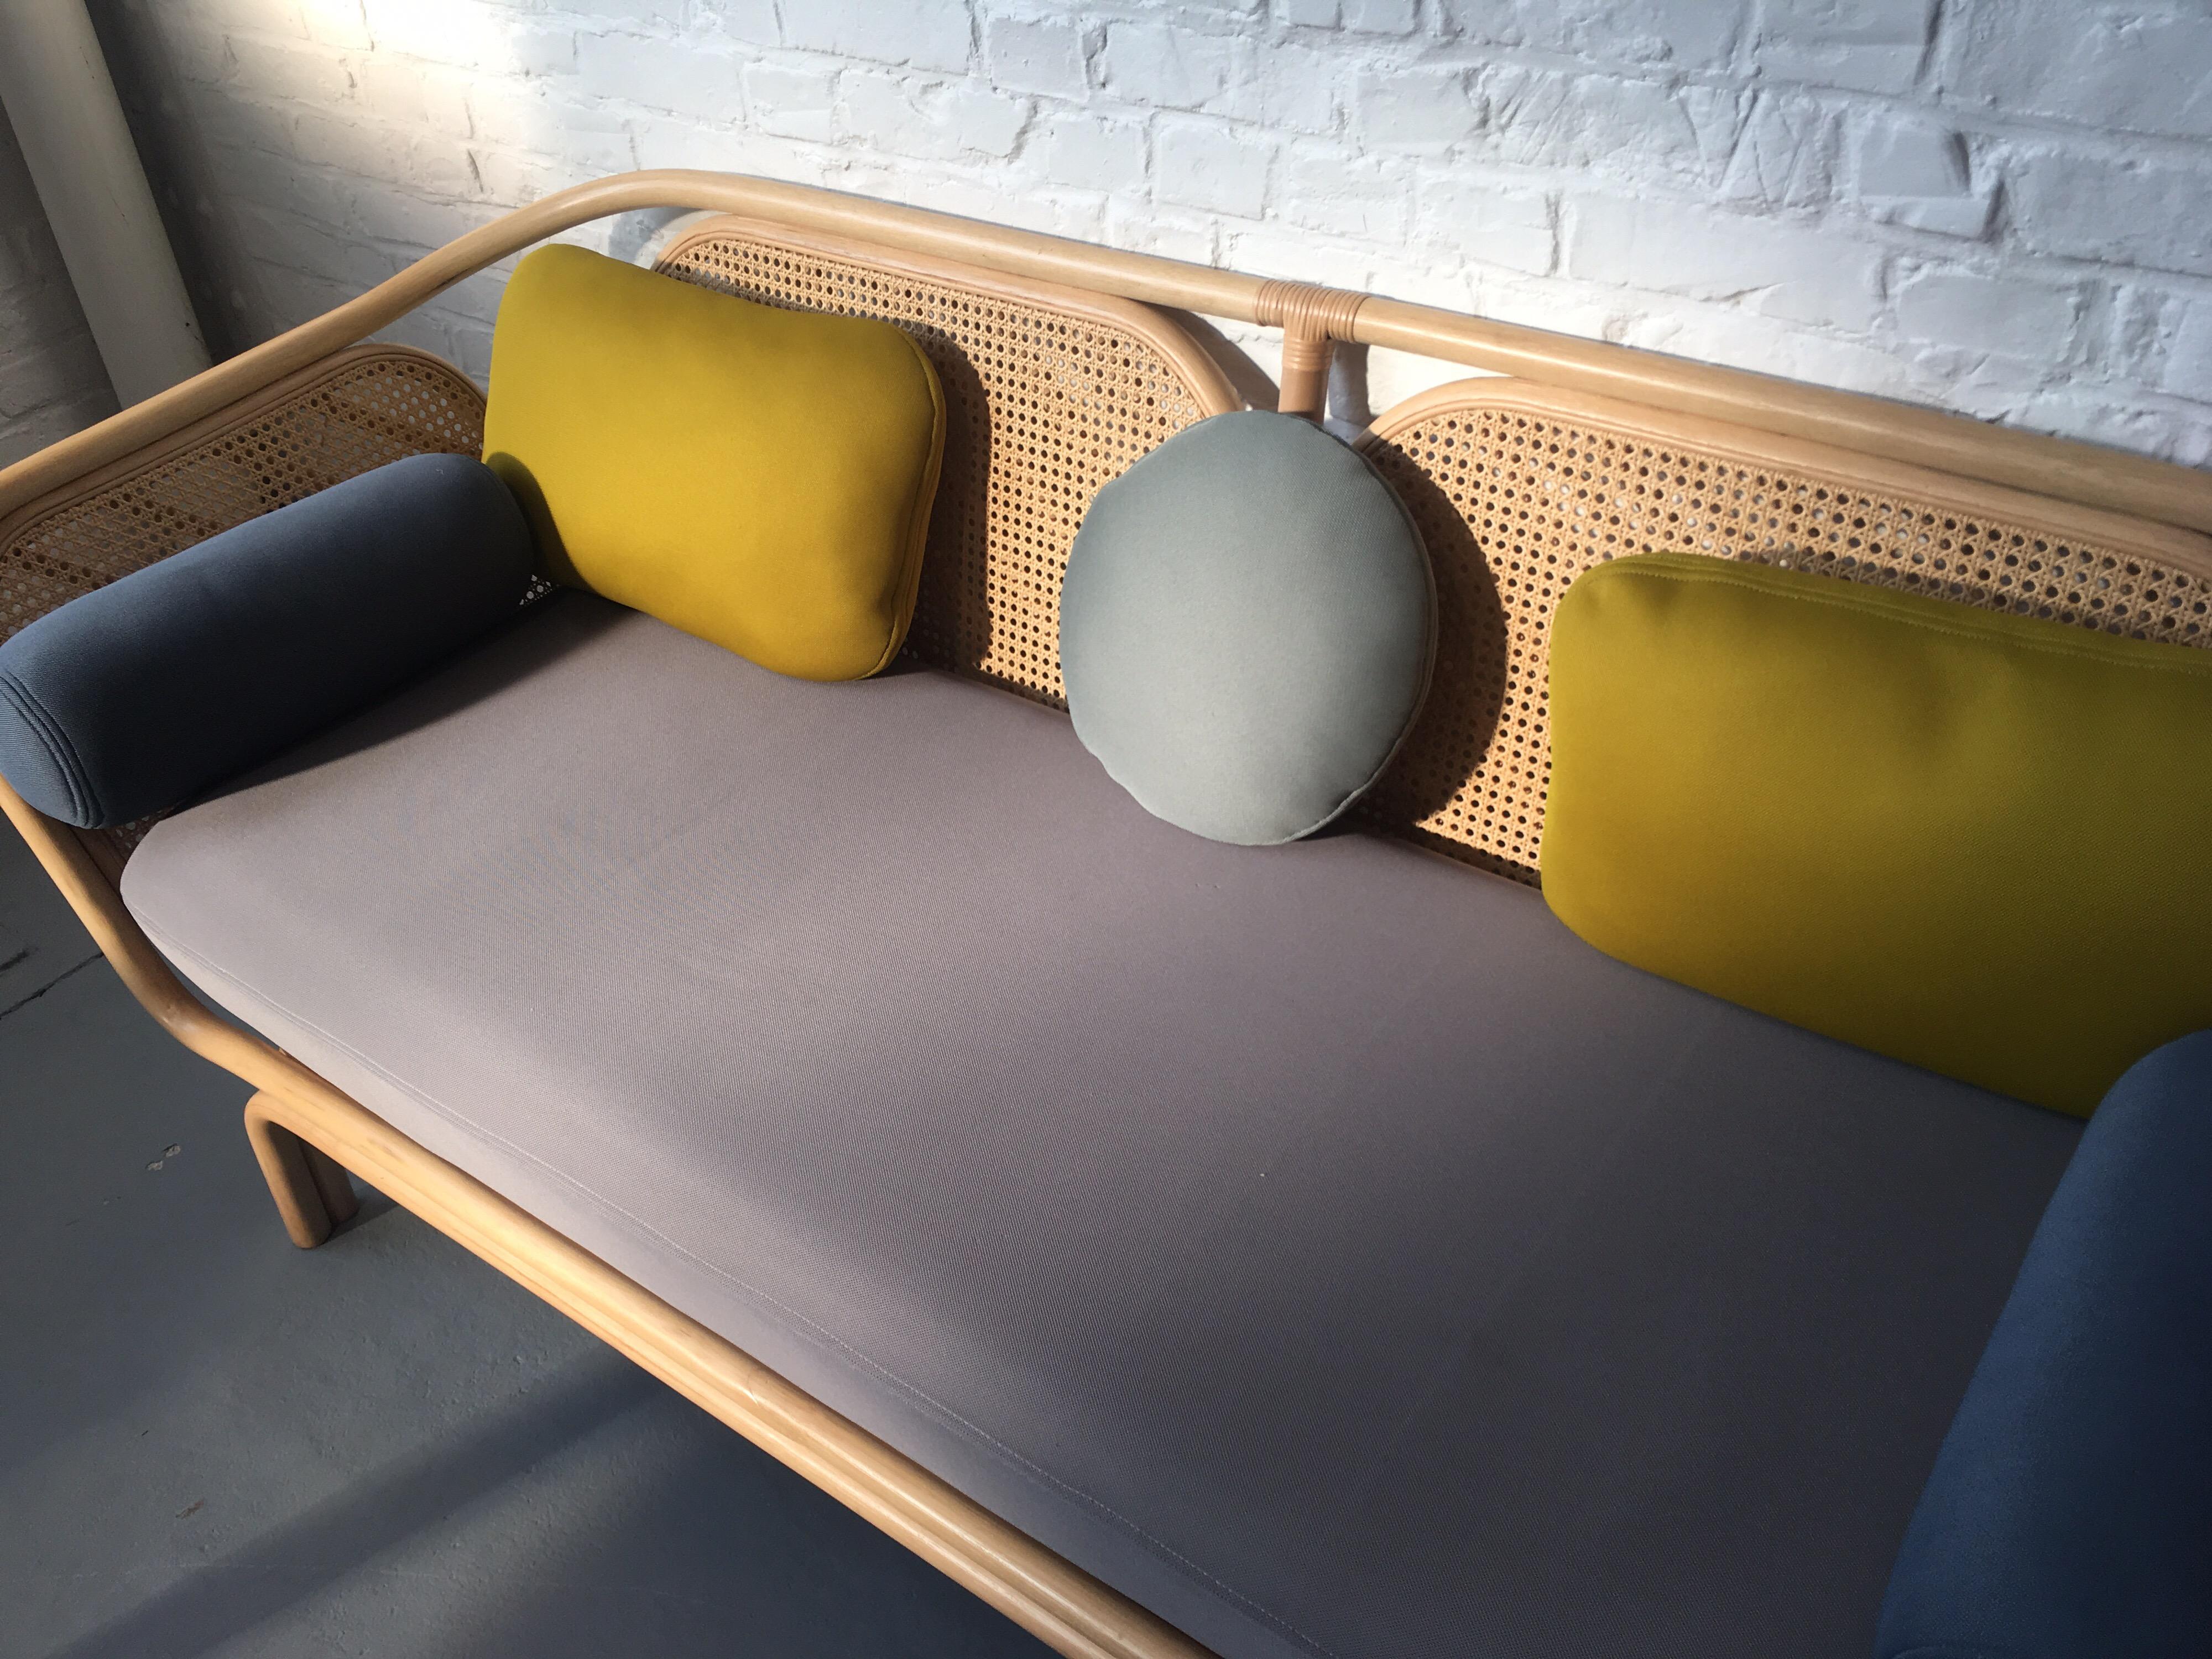 Mid-Century Modern French Design Rattan and Wicker Sofa